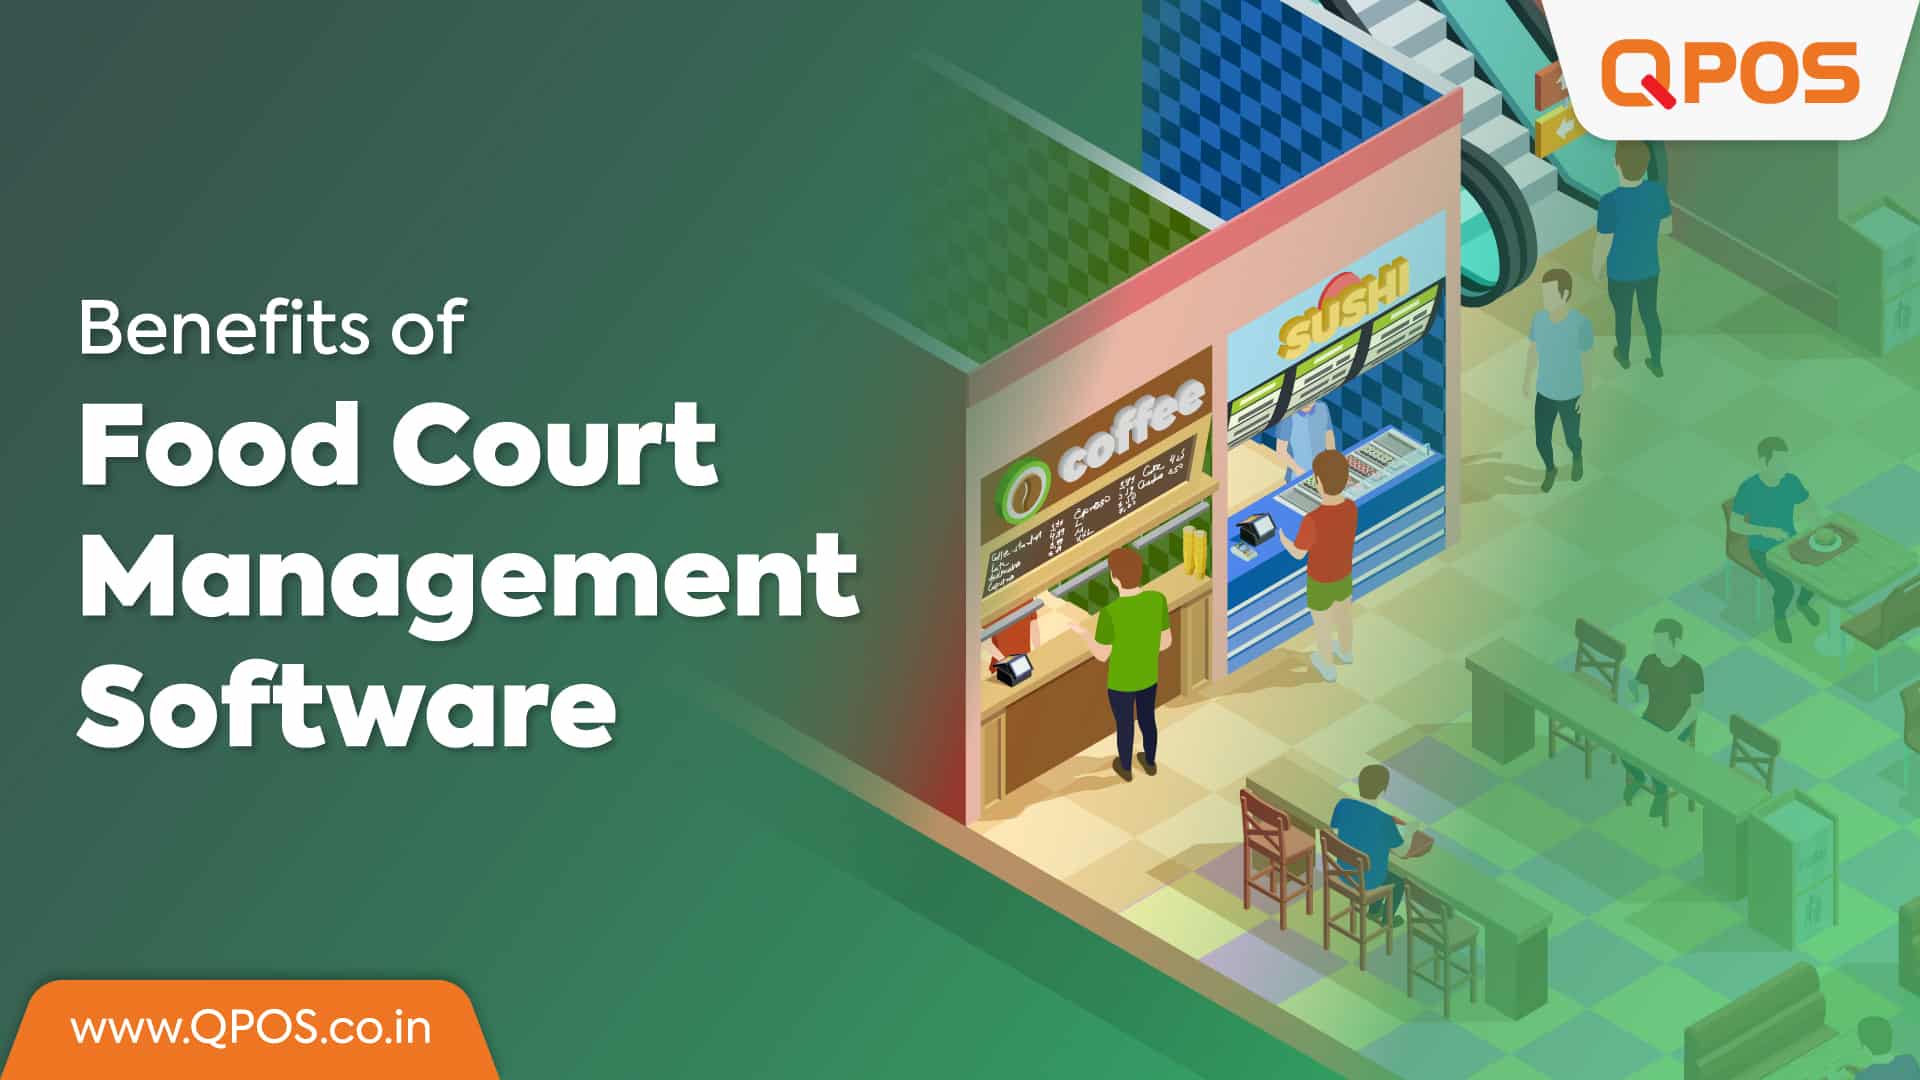 Benefits of Food Court Management Software